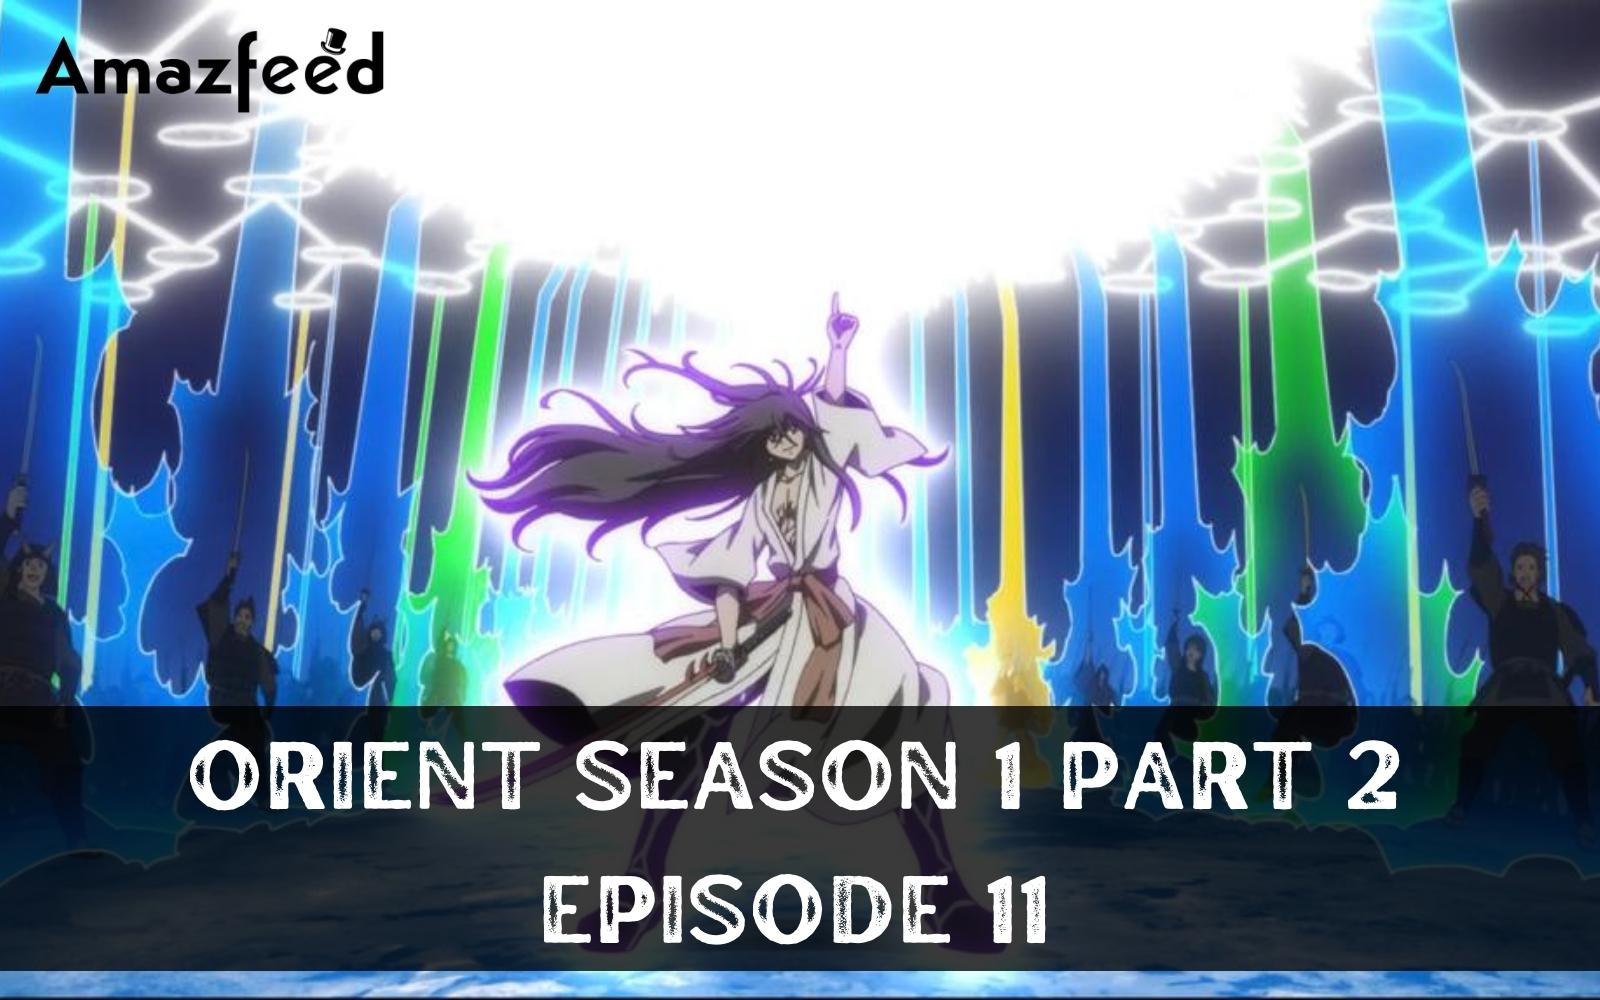 Orient Season 1 Part 2 Episode 11 : Release Date, Release Time, Countdown, Spoiler, Teaser & Recap